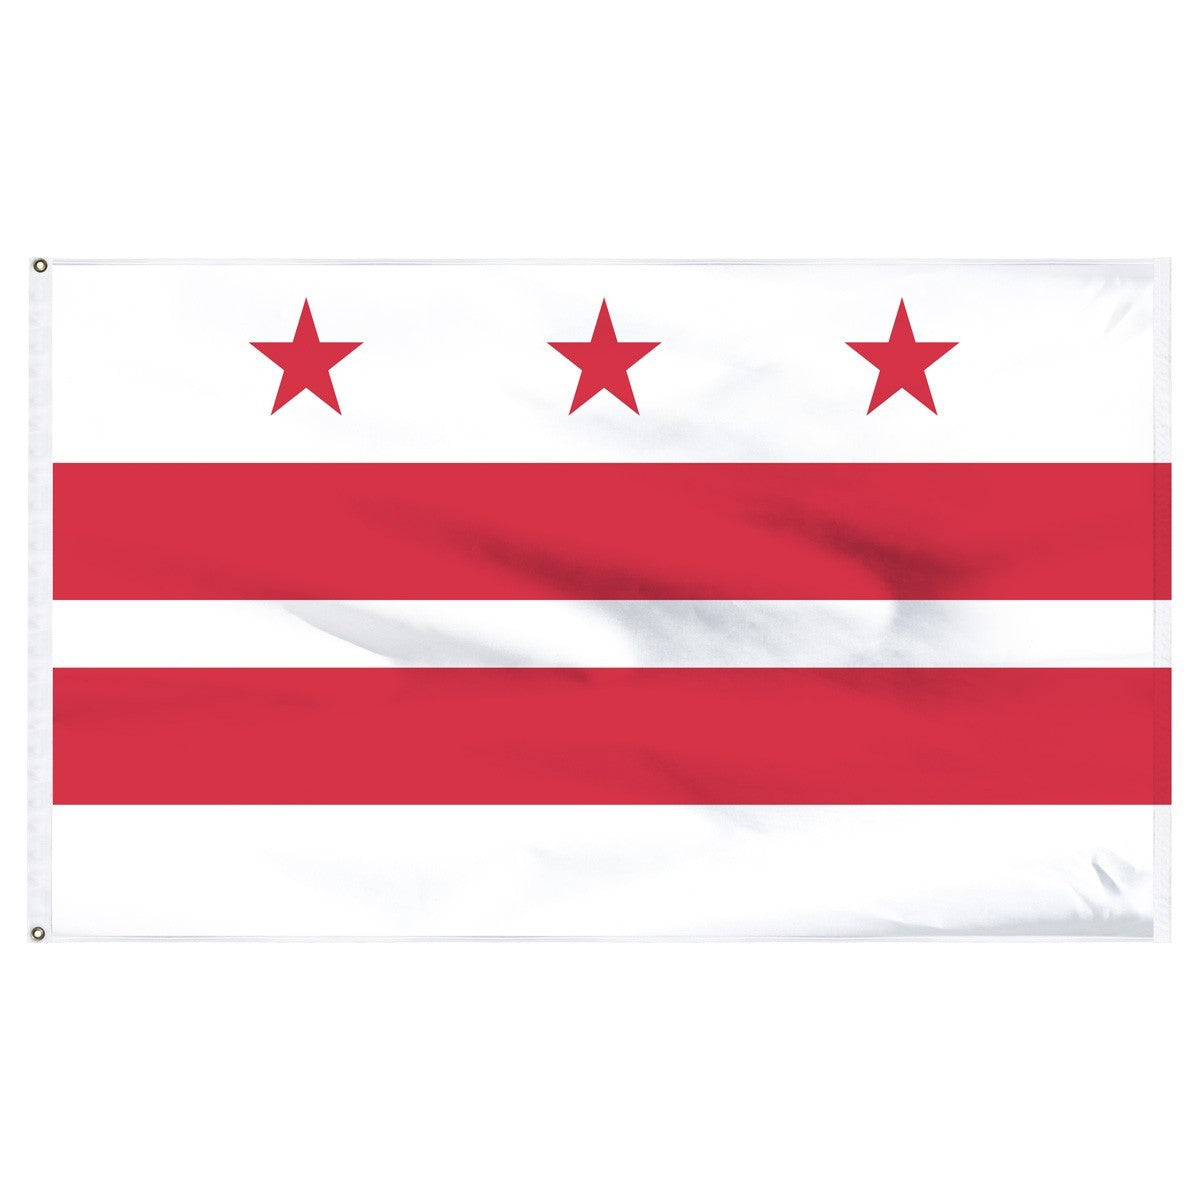 Bandera de nailon para exteriores del Distrito de Columbia (Washington DC) de 3 pies x 5 pies